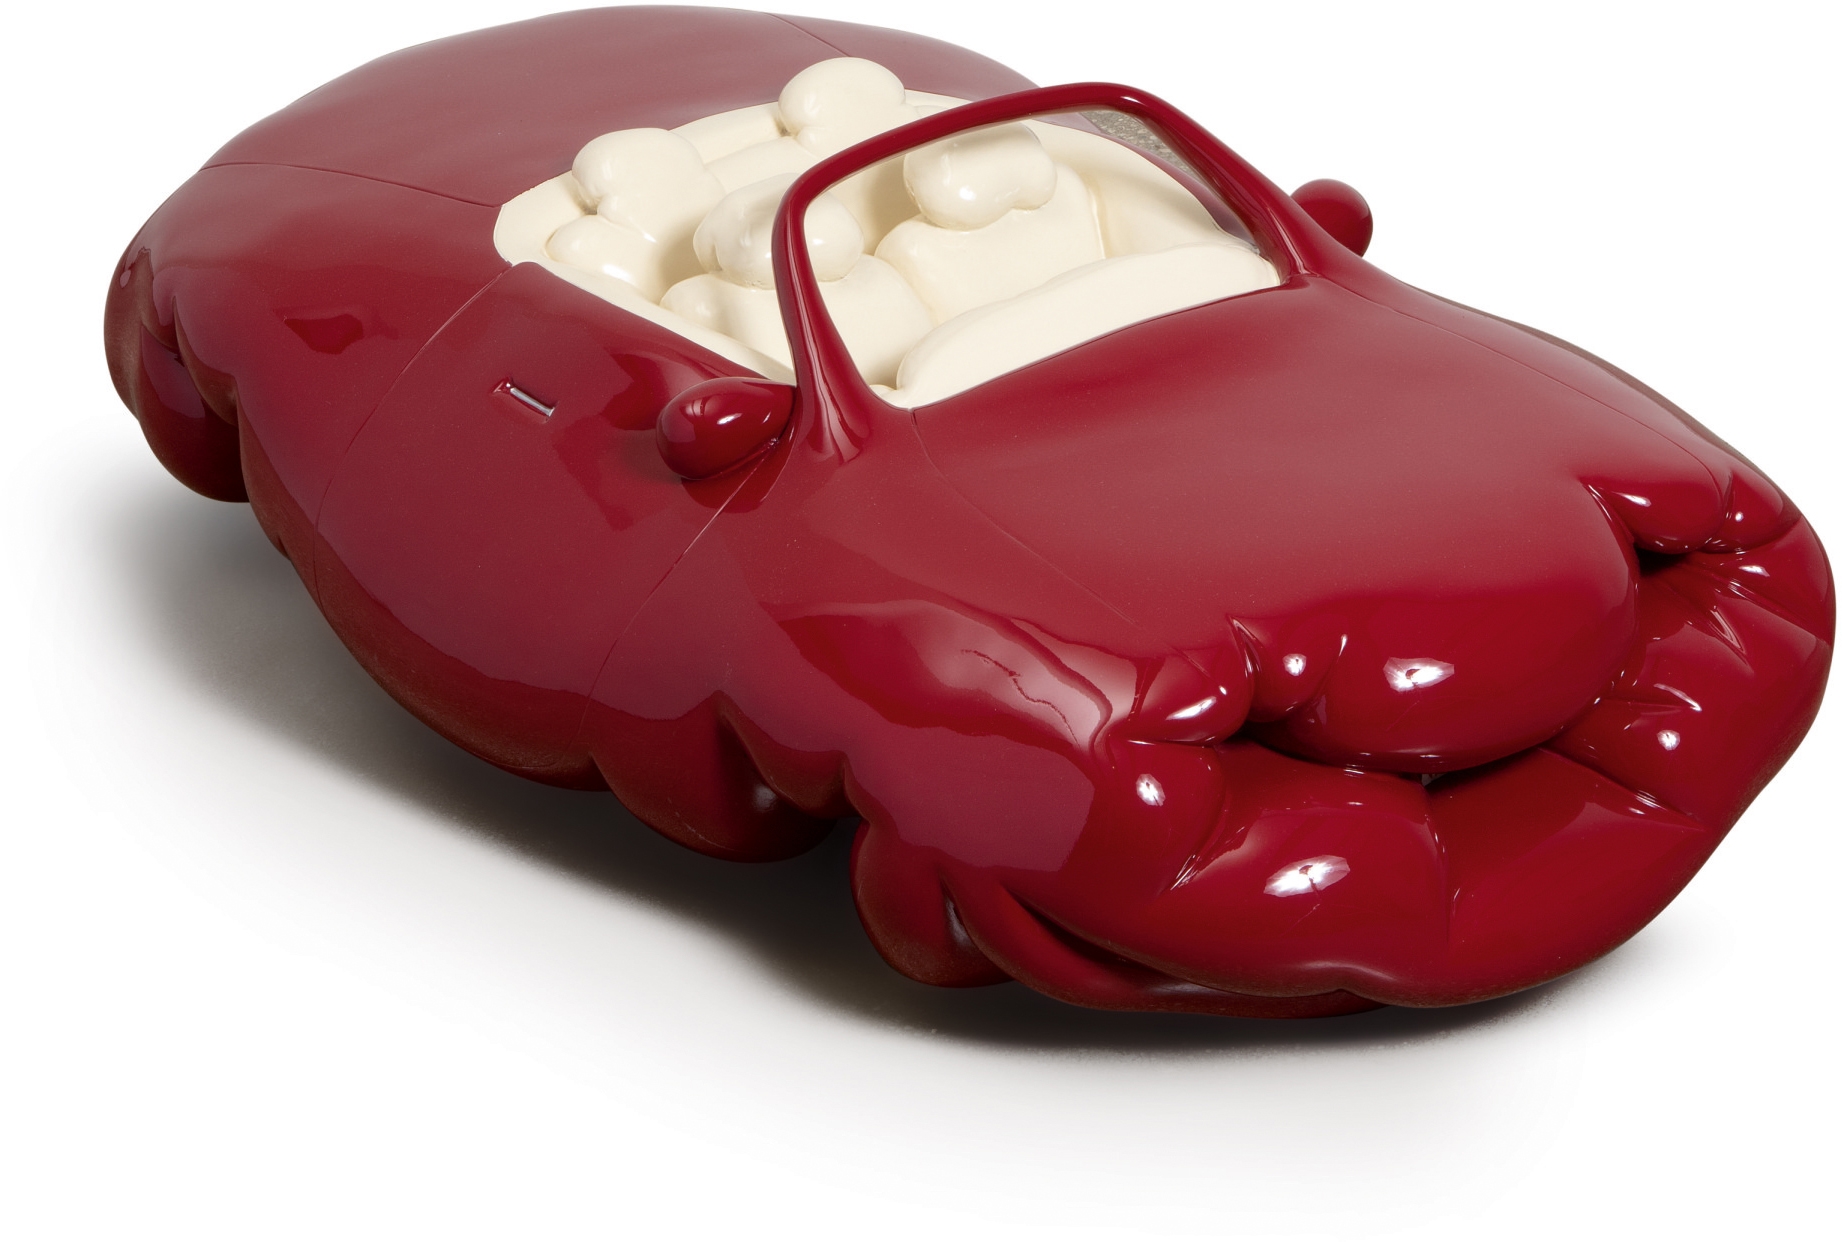 Artwork by Erwin Wurm, FAT CAR, Made of styrofoam, fiberglass, 